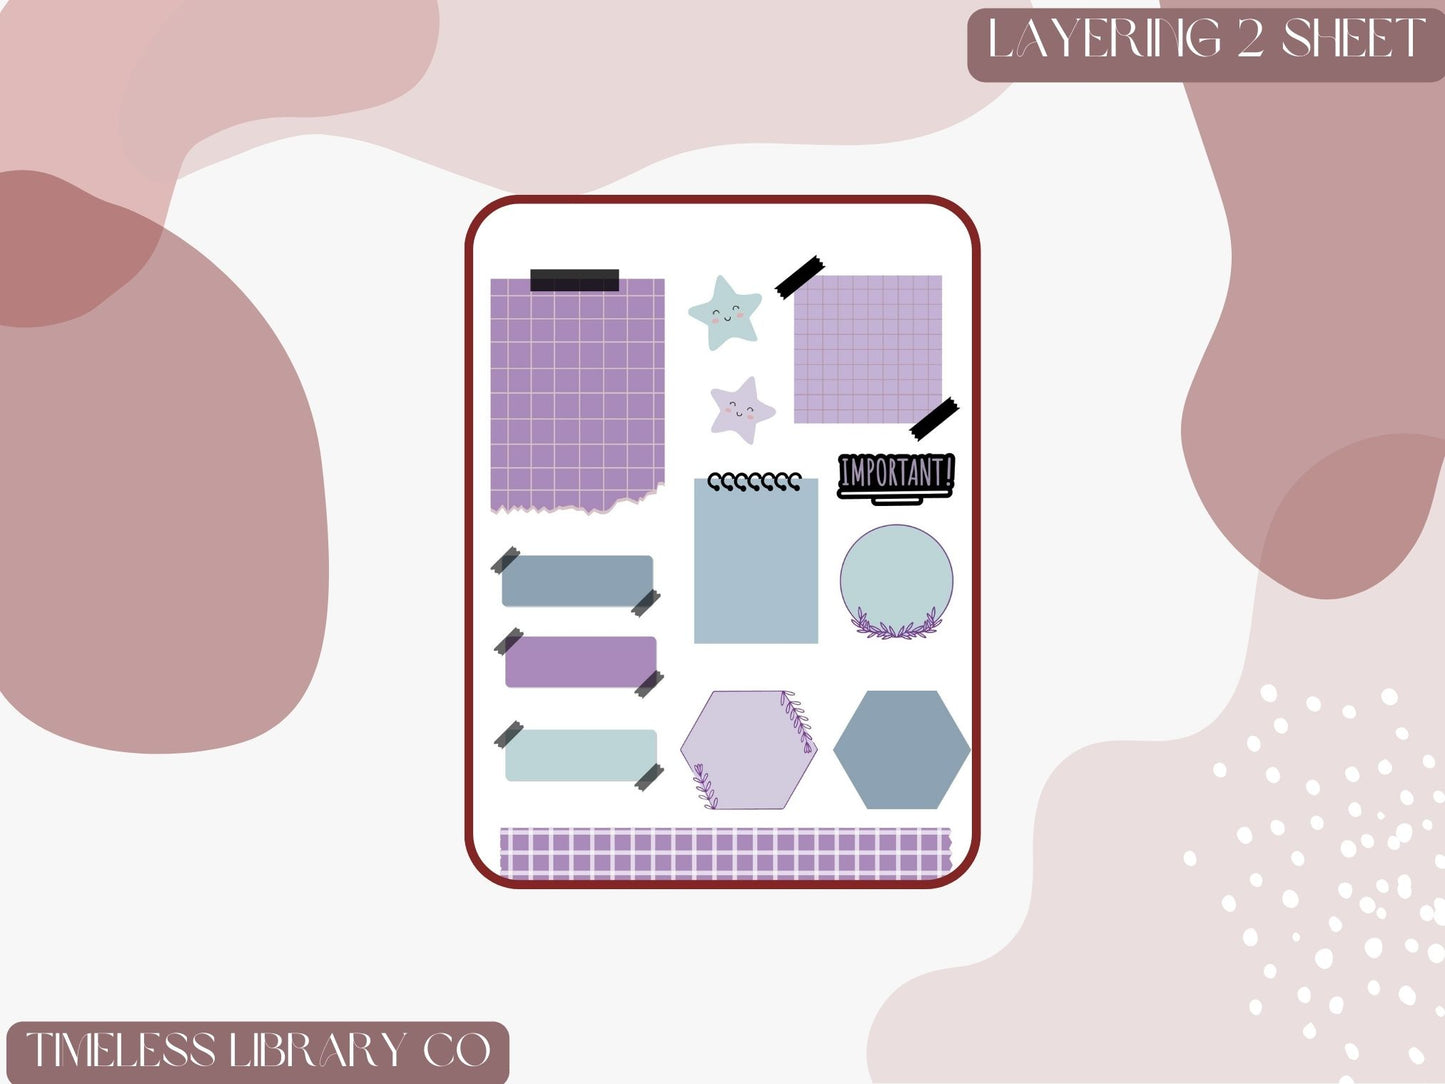 Lavender Haze Vertical Sticker Kit